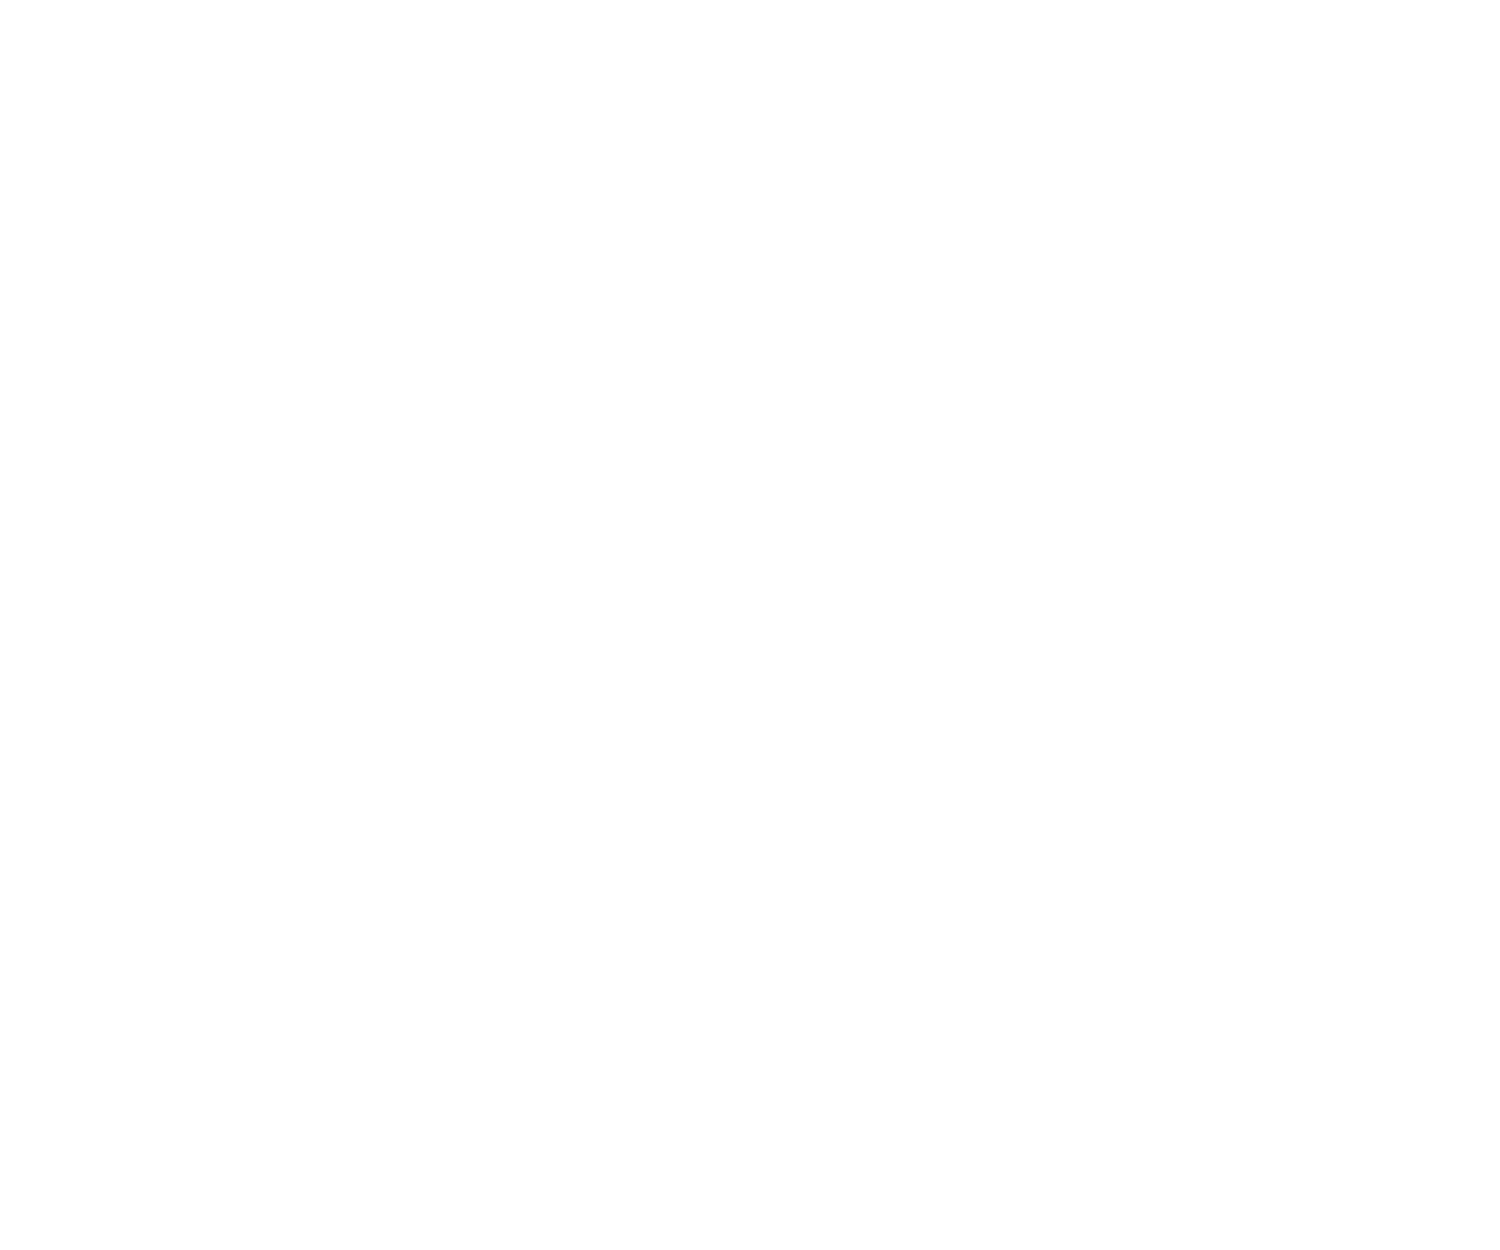 The Radar Group 360